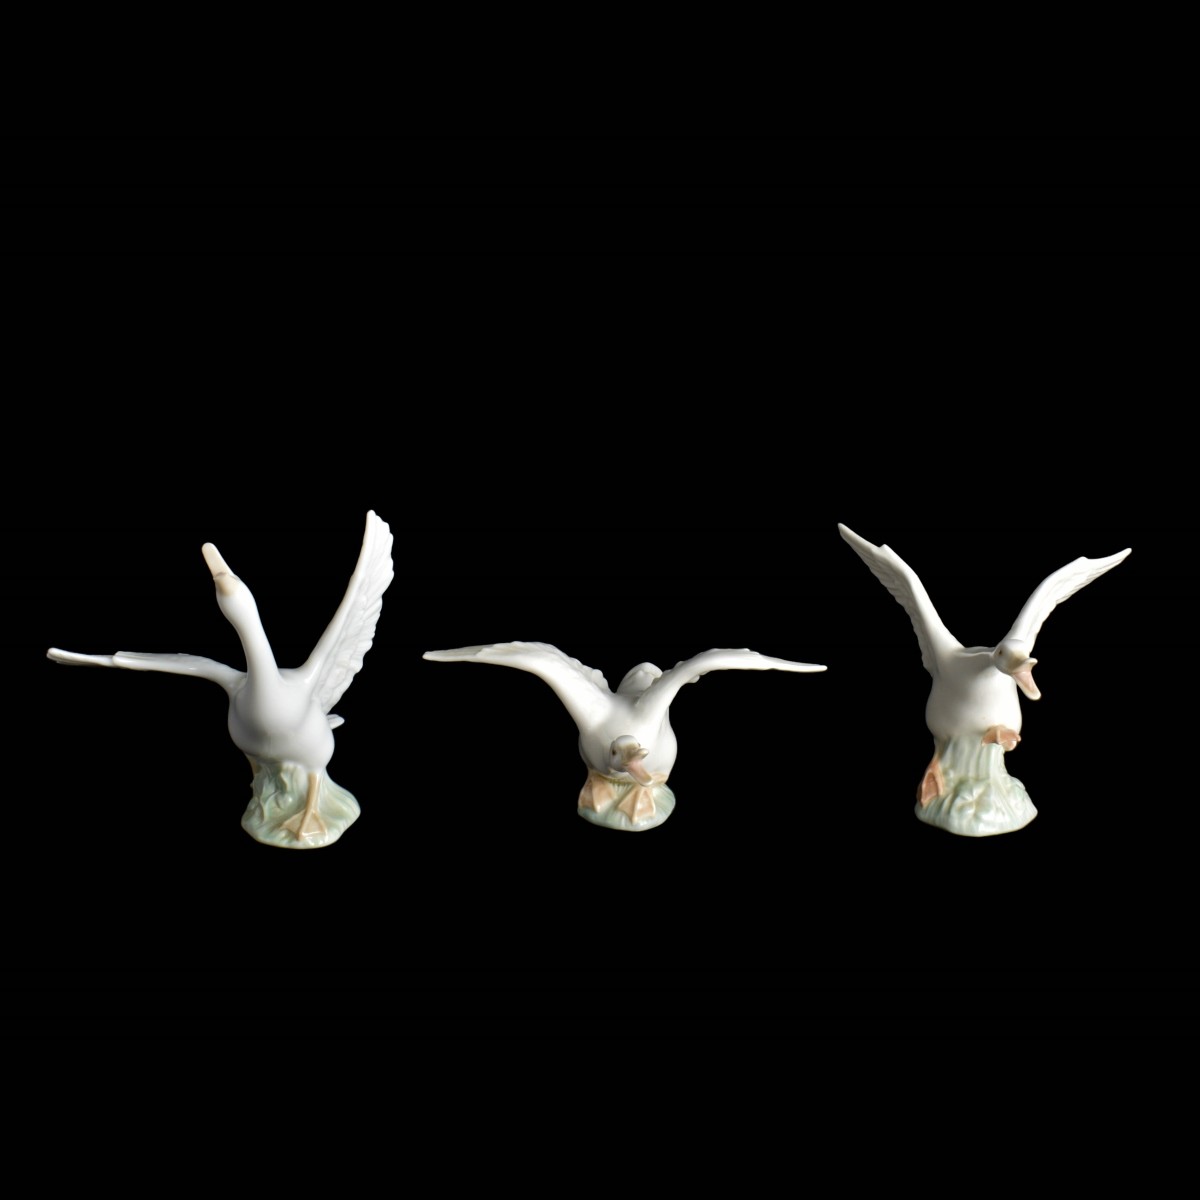 Three Lladro Porcelain Figurines